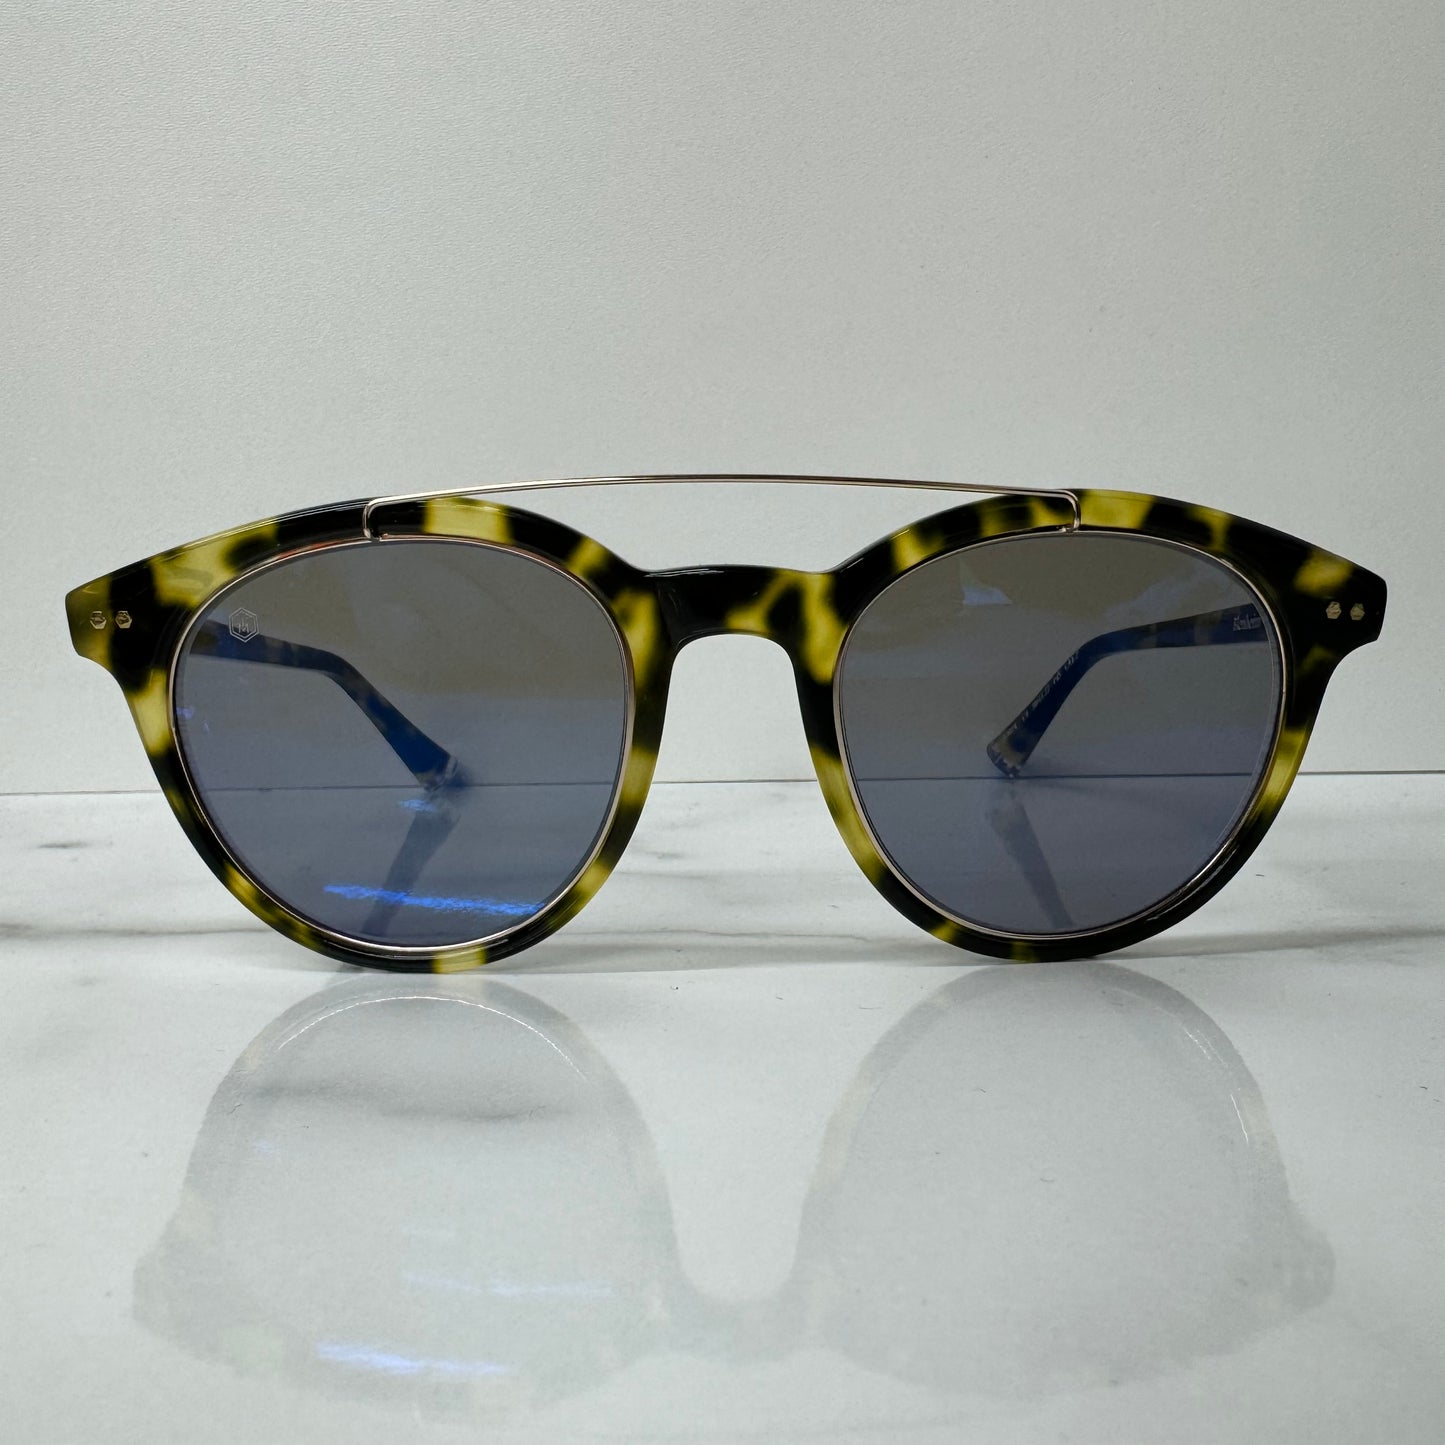 Taylor Morris Blenheim Yellow & Black Sunglasses - 32071 C4